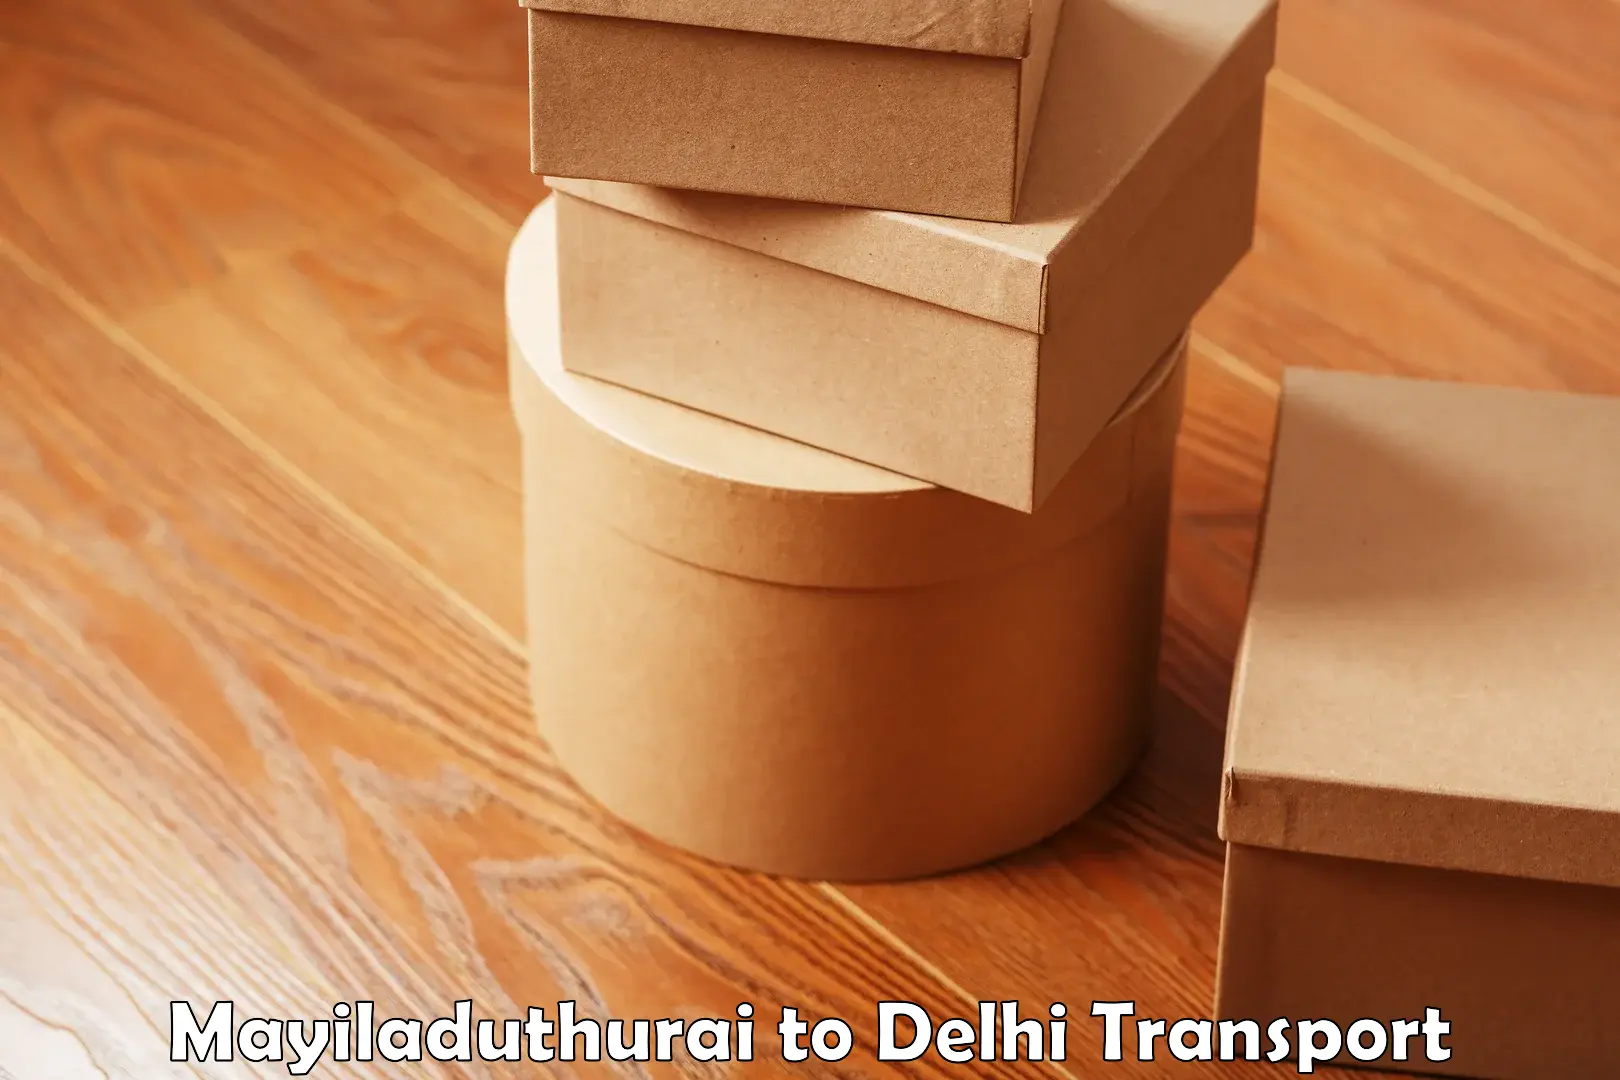 Truck transport companies in India Mayiladuthurai to Delhi